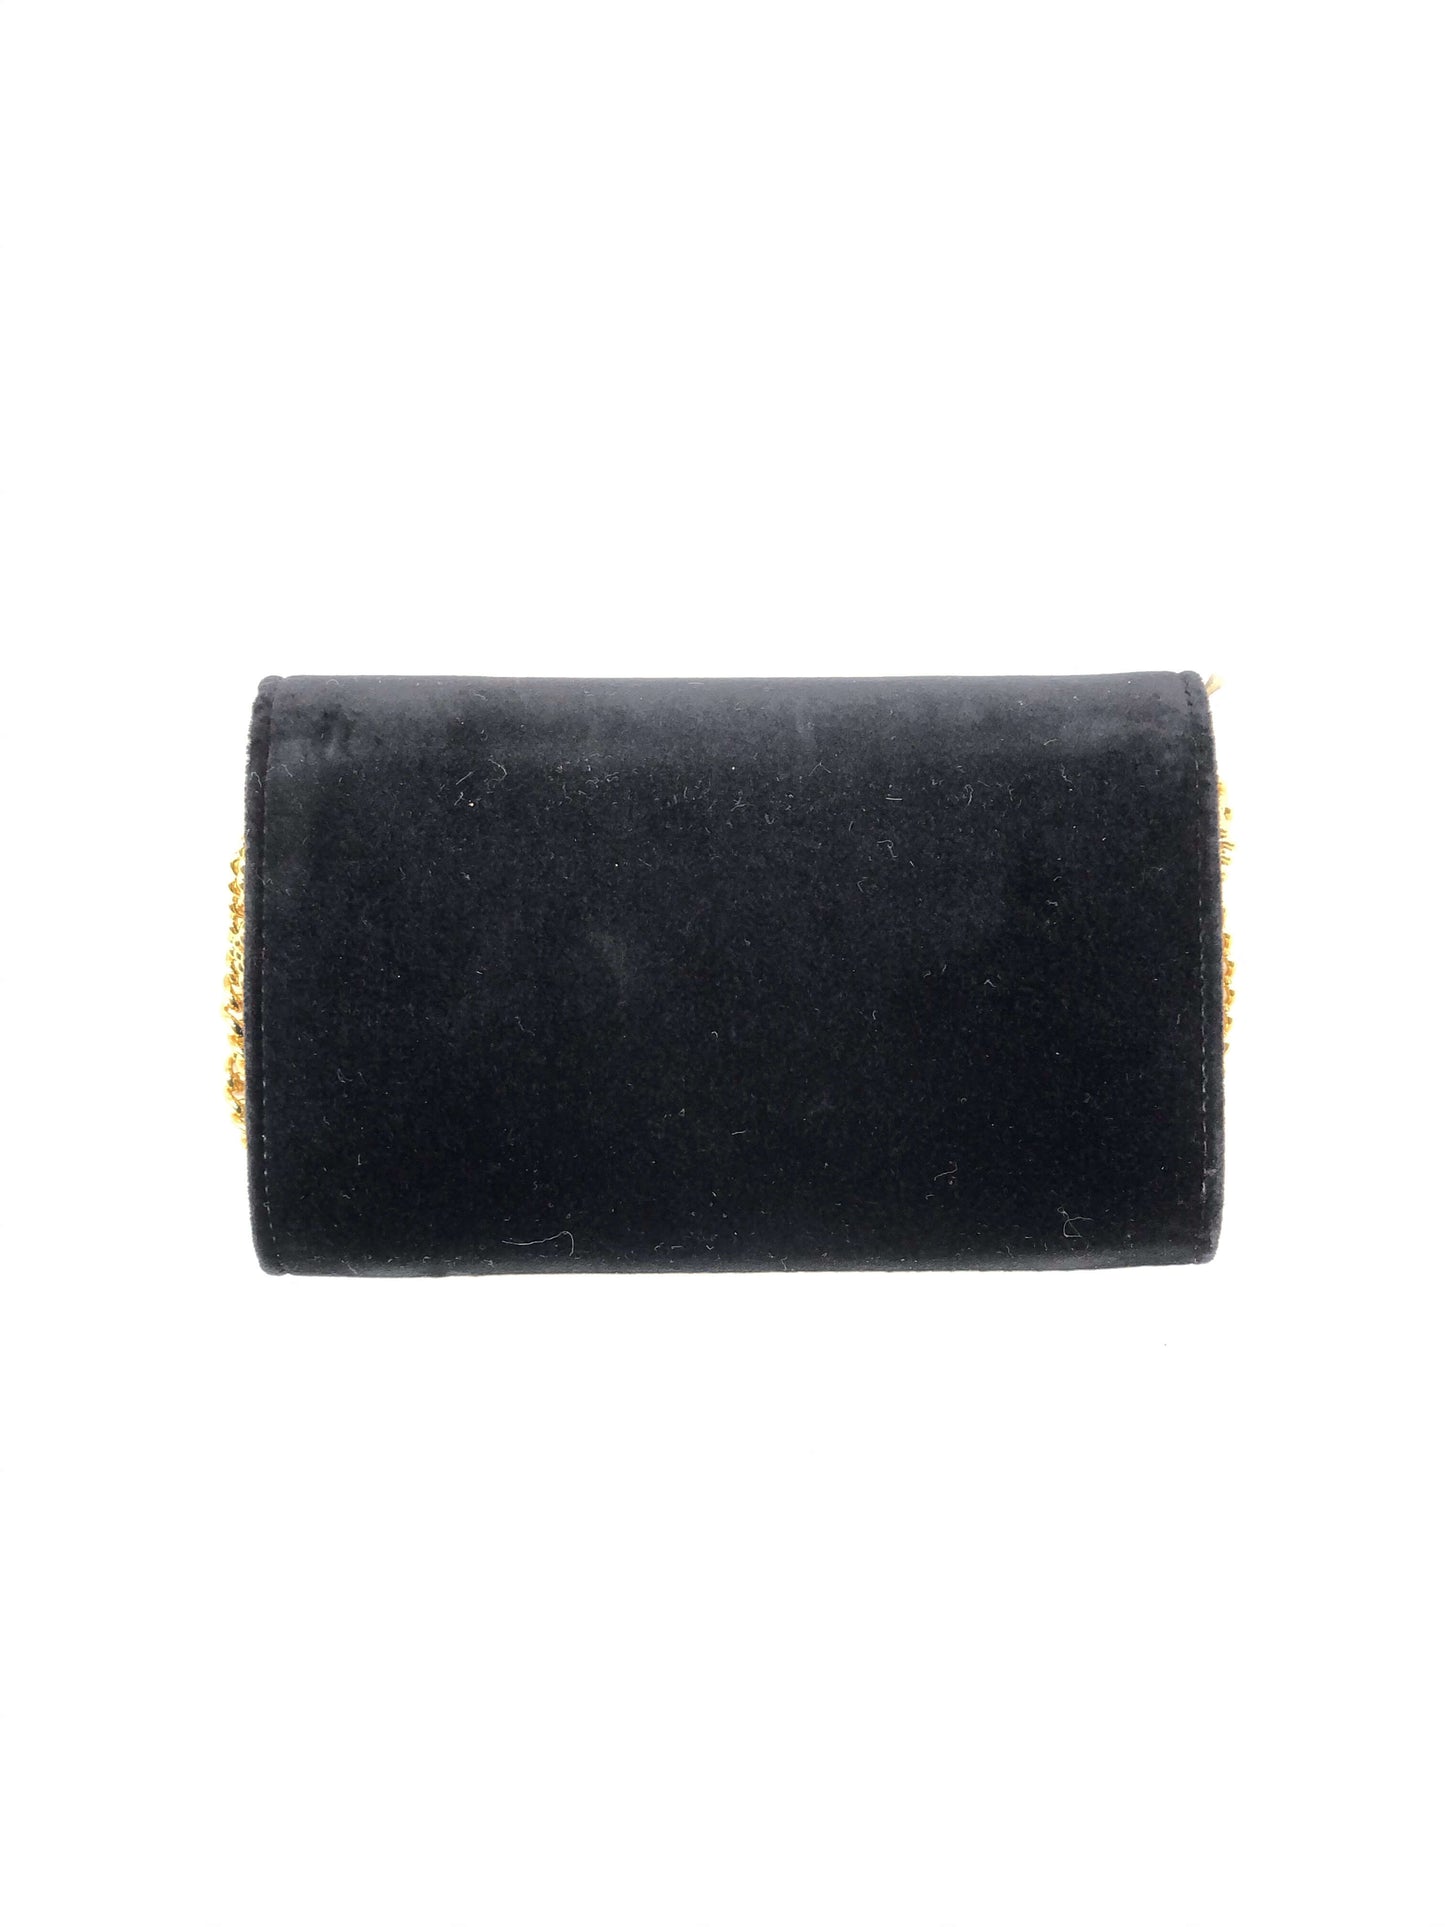 Fendi Mini Wallet on Chain Bag